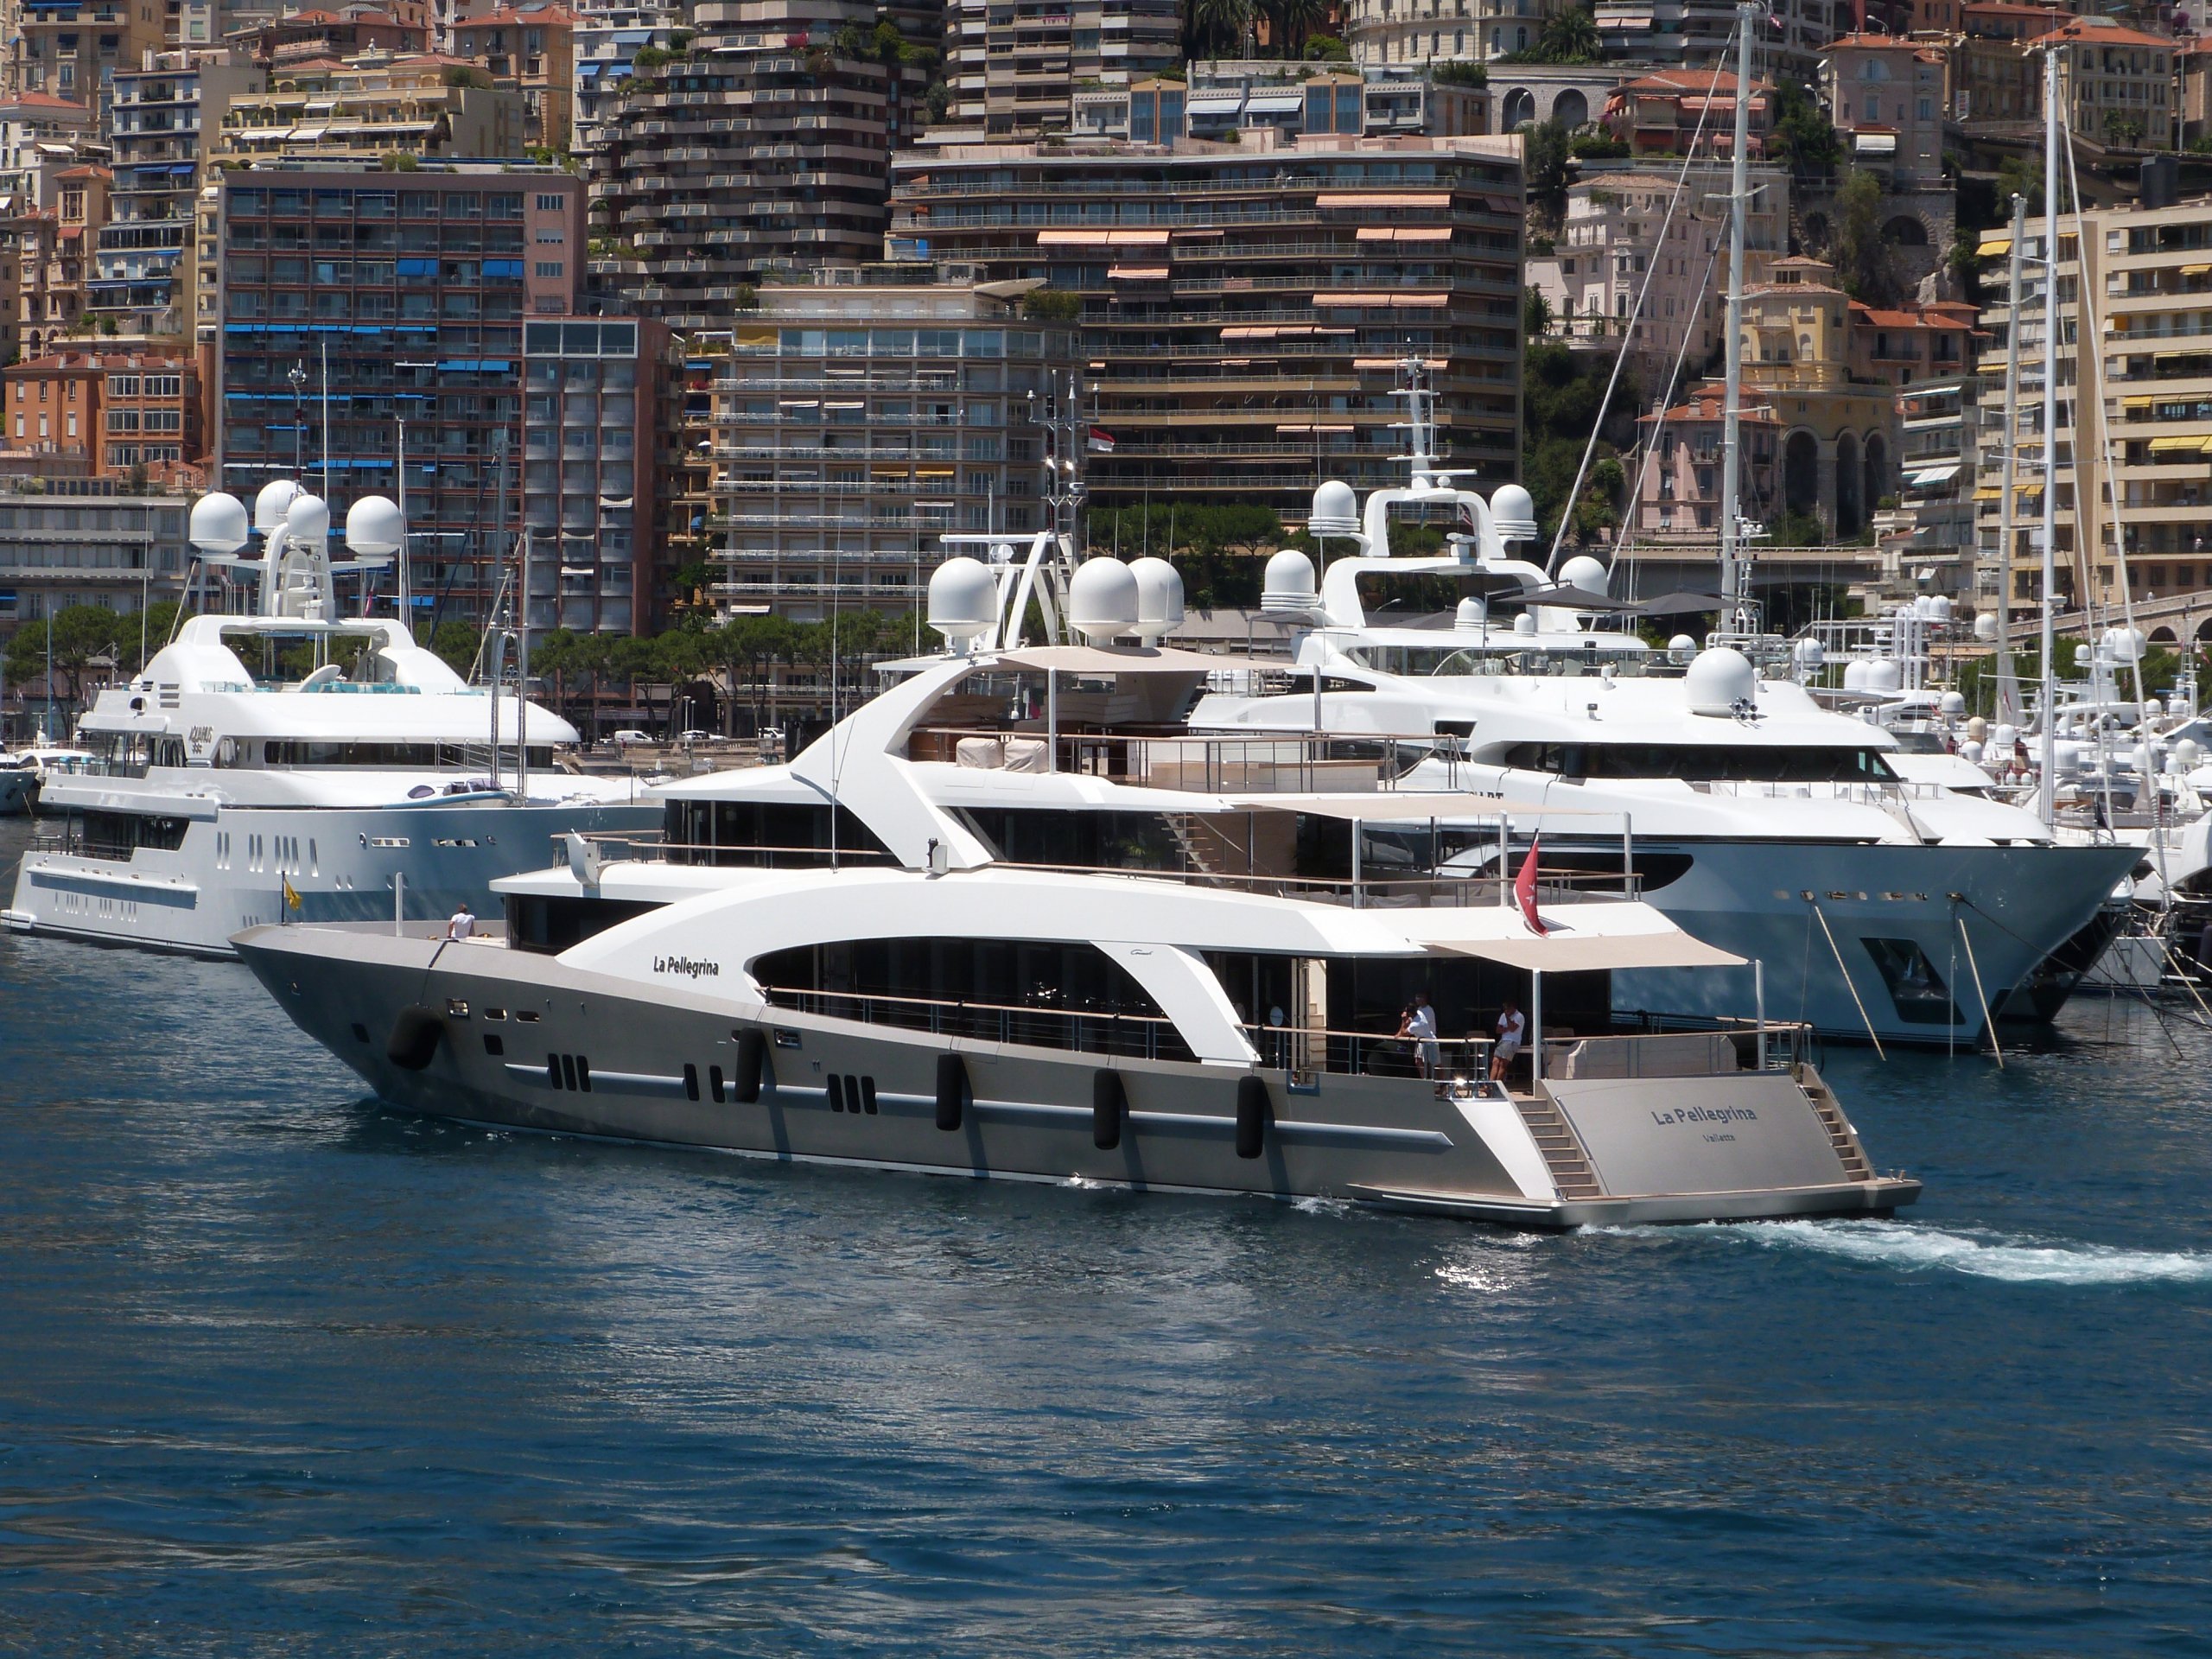 LA PELLEGRINA Yacht • Couach Yachts • 2012 • Owner Roberto Tomasini-Grinover